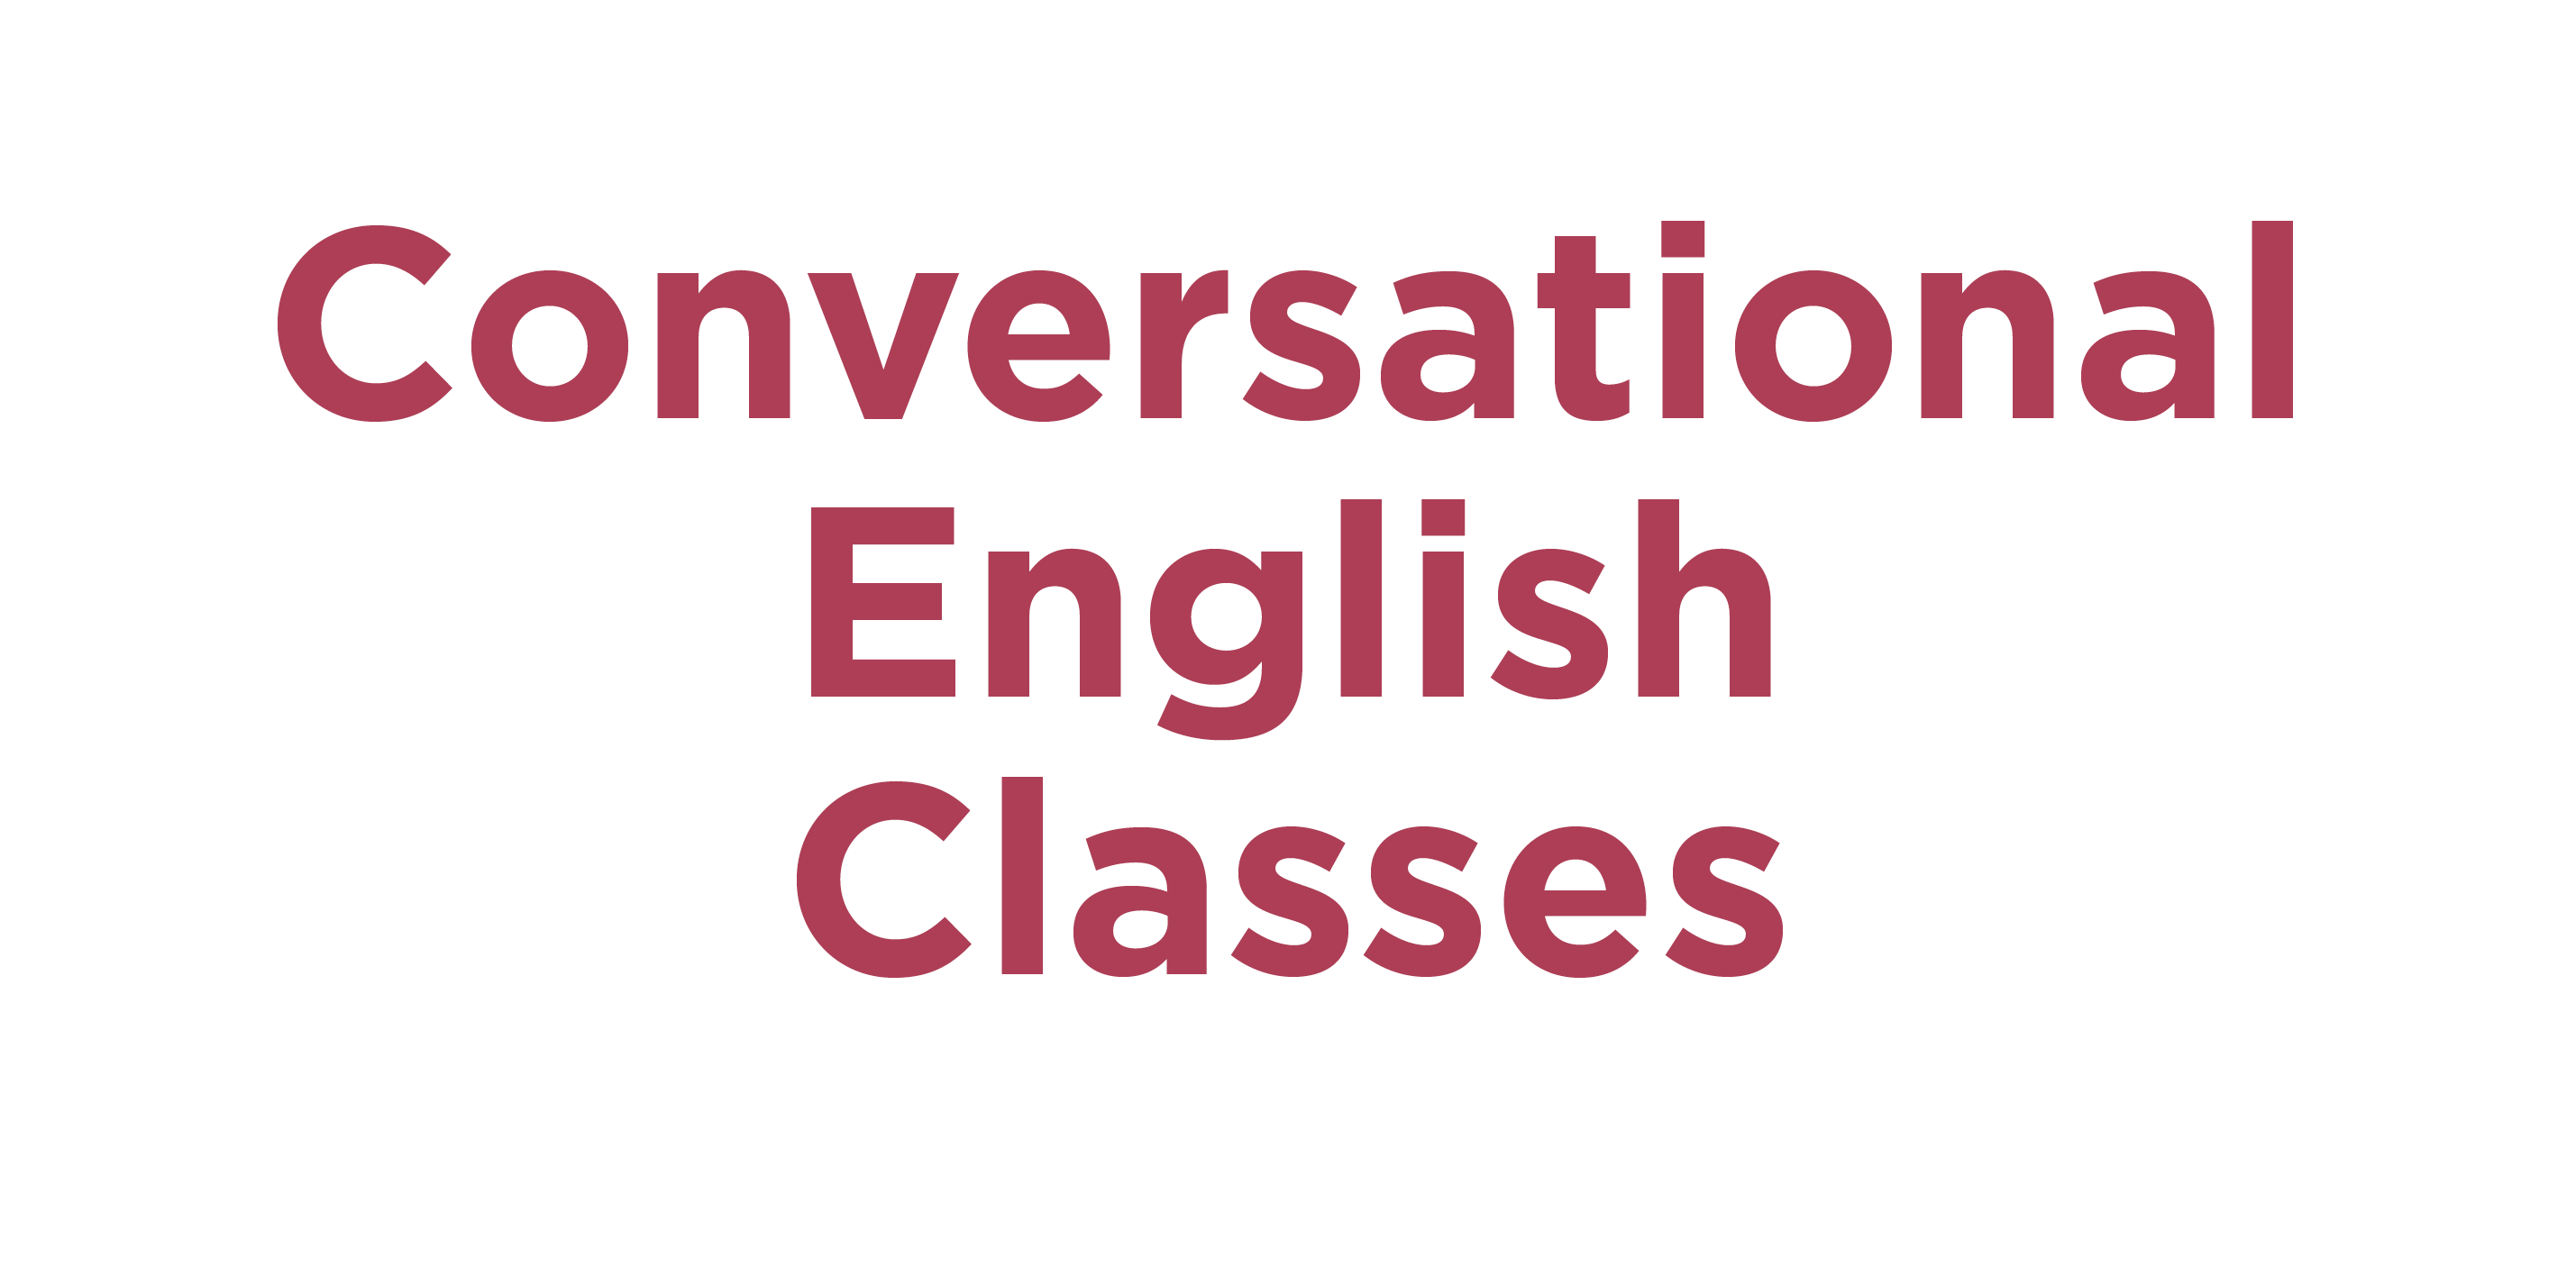 CONVERSATIONAL ENGLISH CLASSES